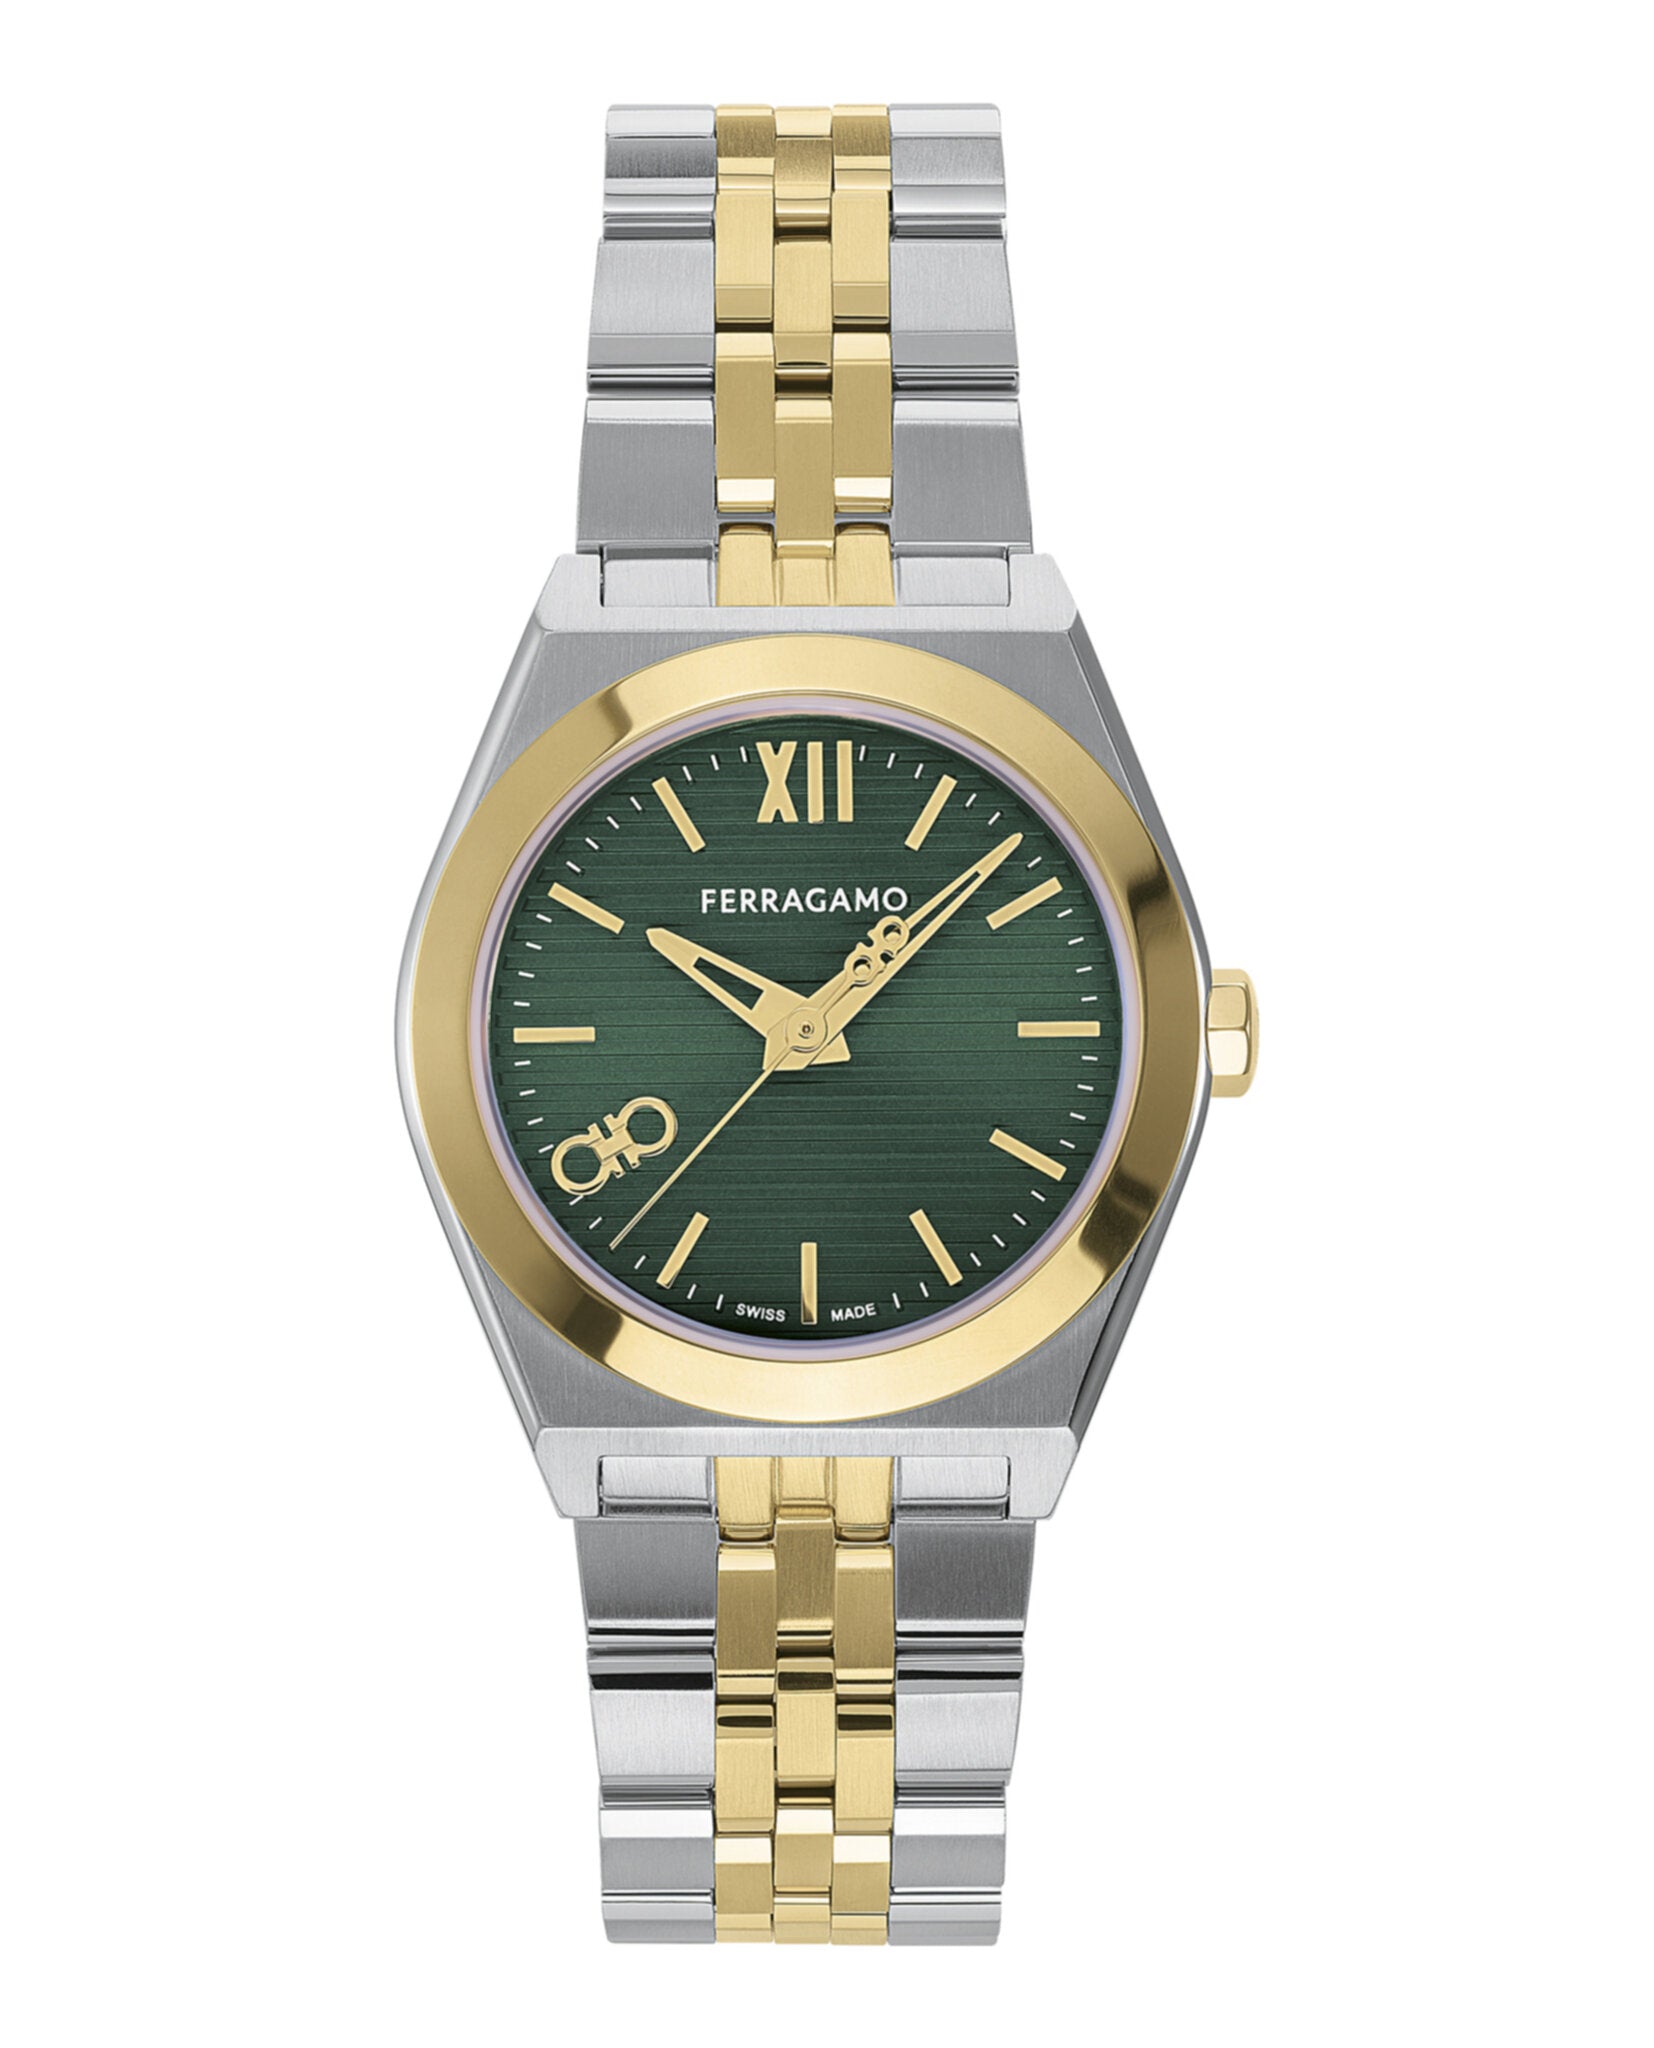 Vega New Bracelet Watch